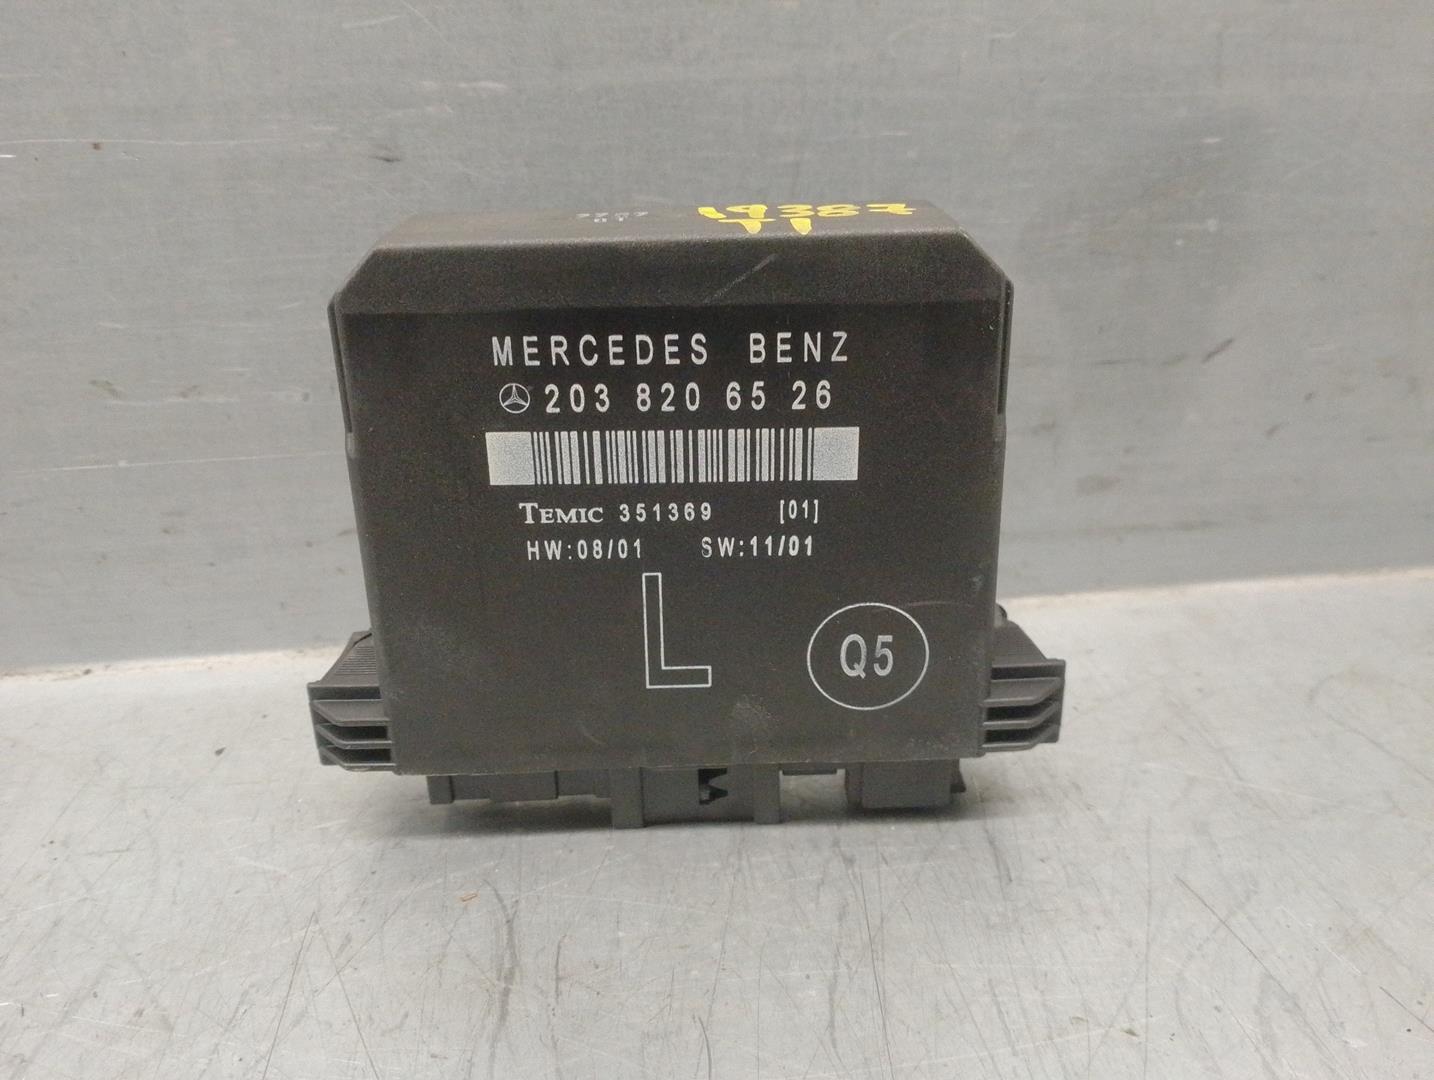 MERCEDES-BENZ C-Class W203/S203/CL203 (2000-2008) Kiti valdymo blokai 2038206526, 351369, TEMIC 24193387